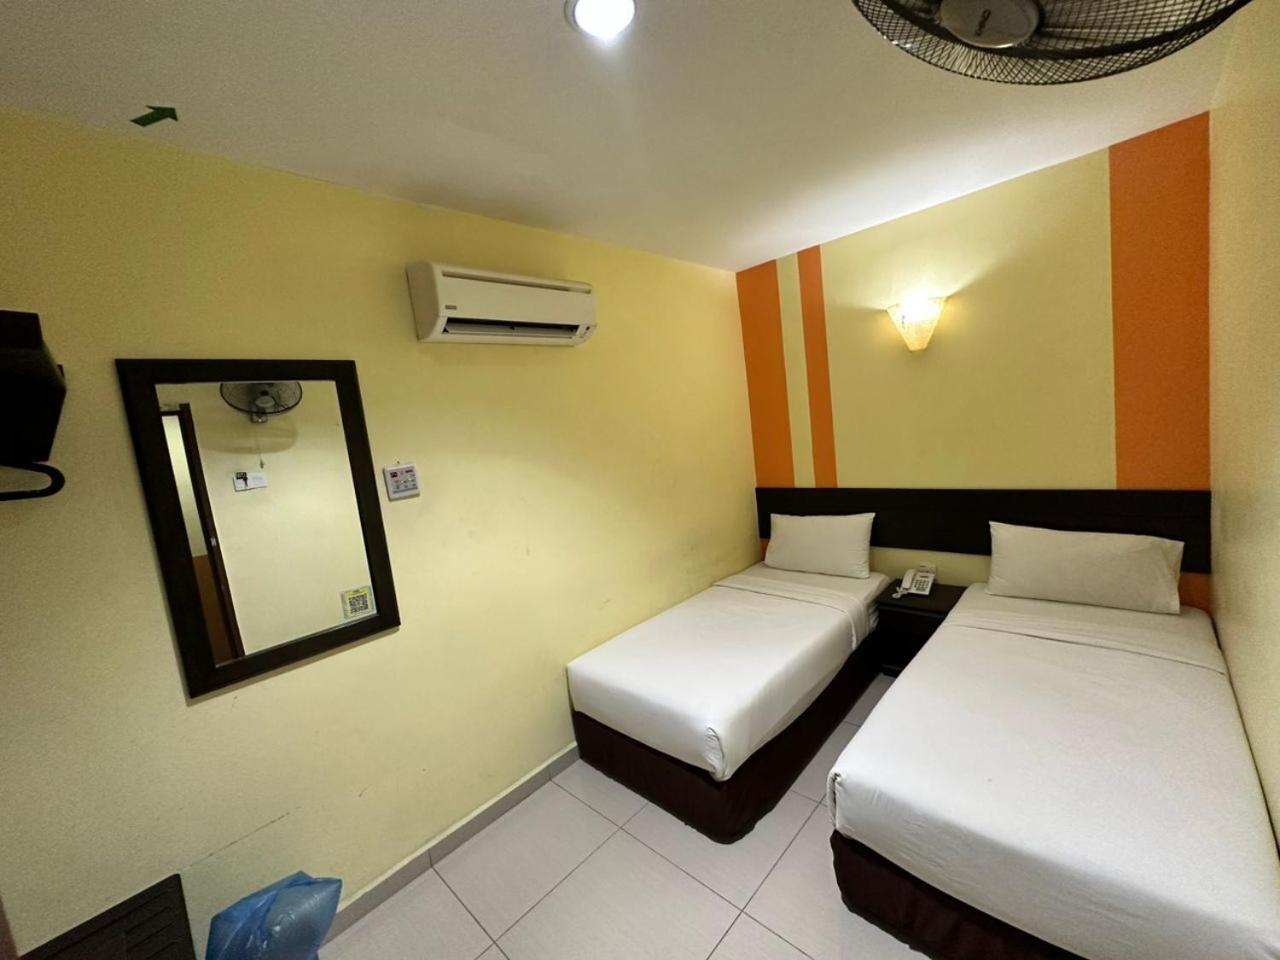 Sun Inns Hotel Sentral, Brickfields Kuala Lumpur Exterior photo